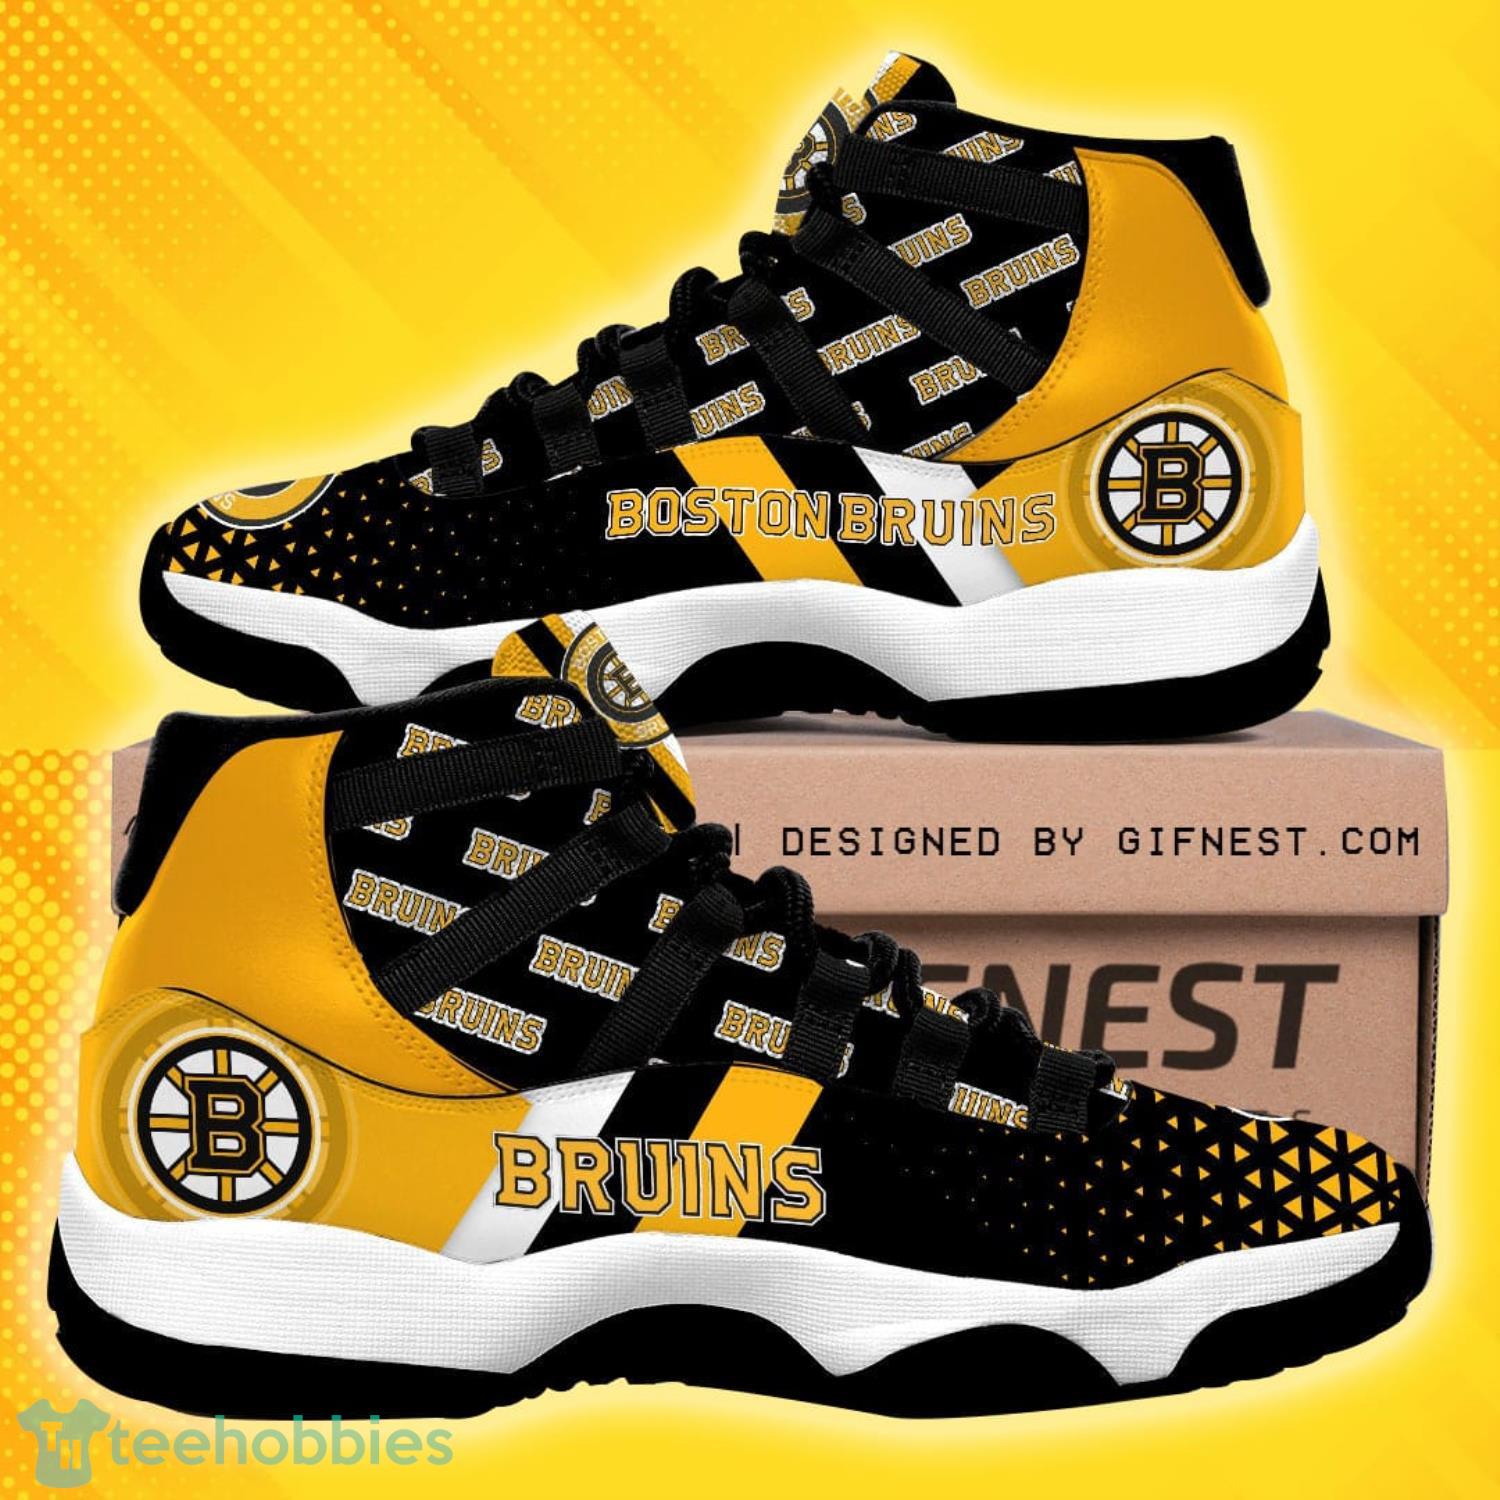 Boston Bruins Team Air Jordan 11 Shoes For Fans Product Photo 1